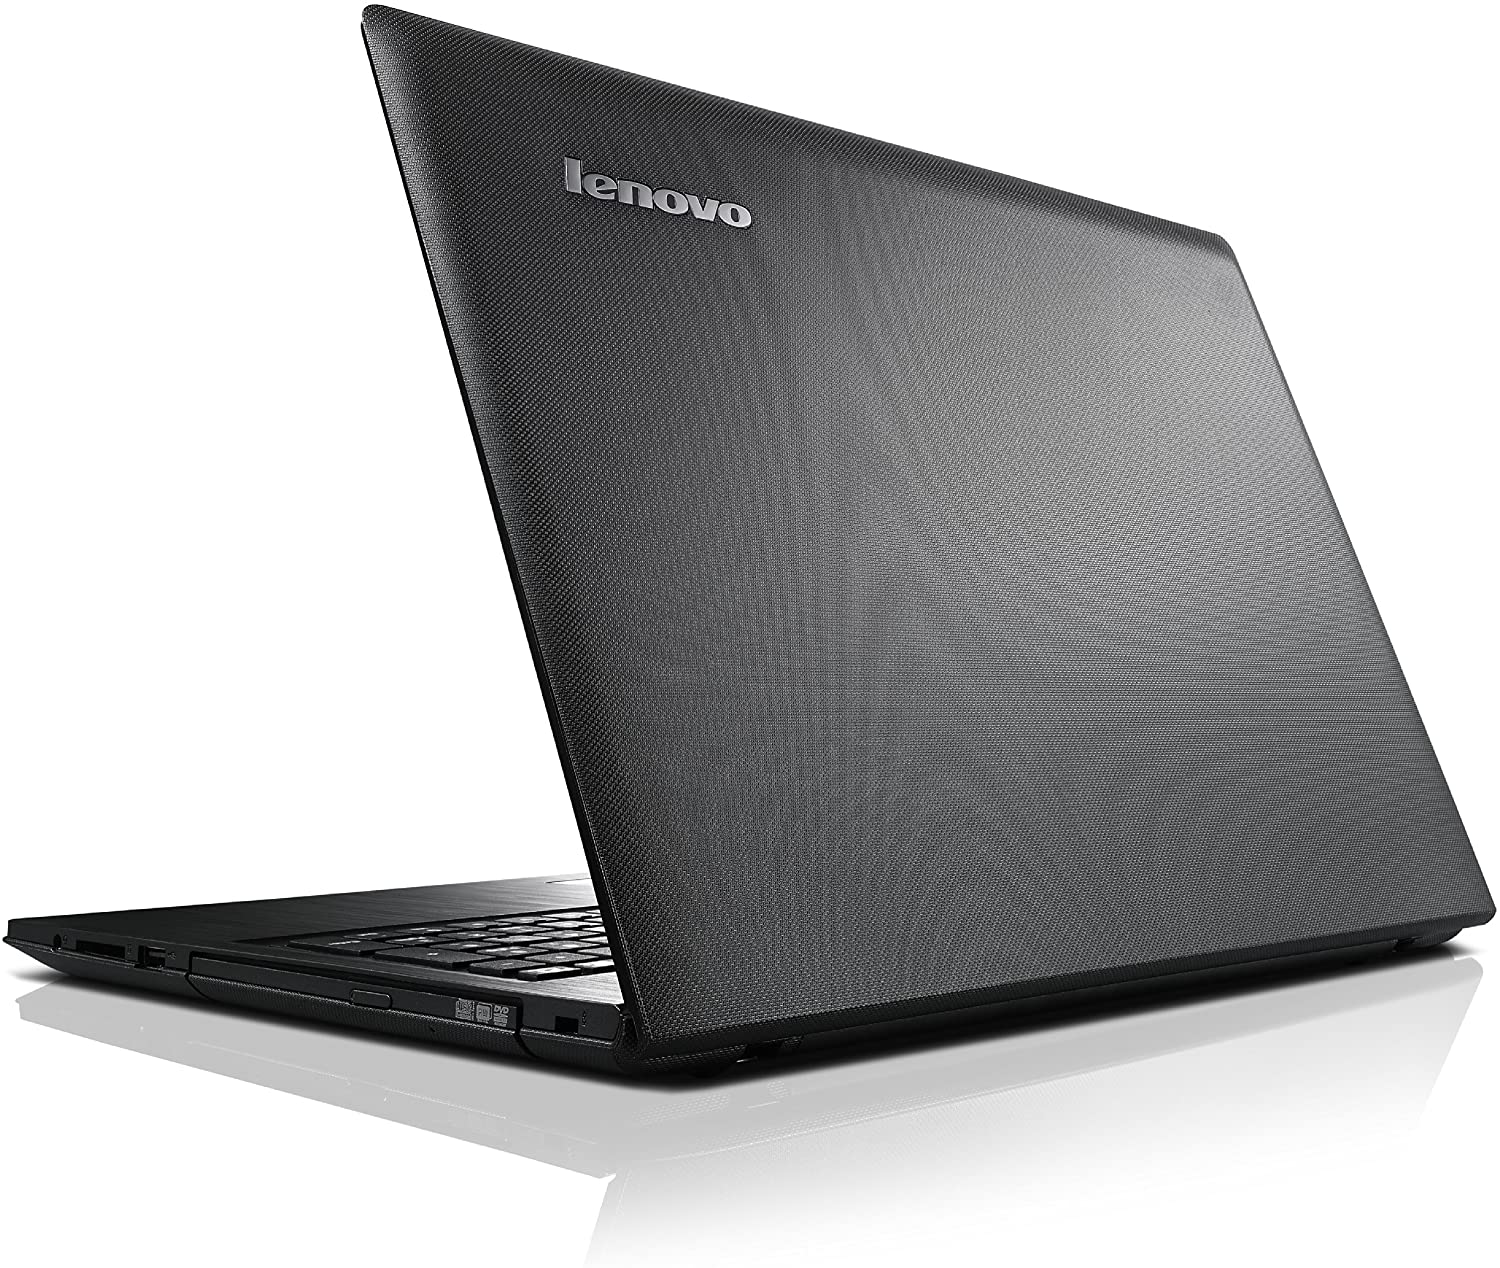 Nâng cấp SSD, RAM, Caddy bay cho Laptop Lenovo IdeaPad G50-30, G5030 -  